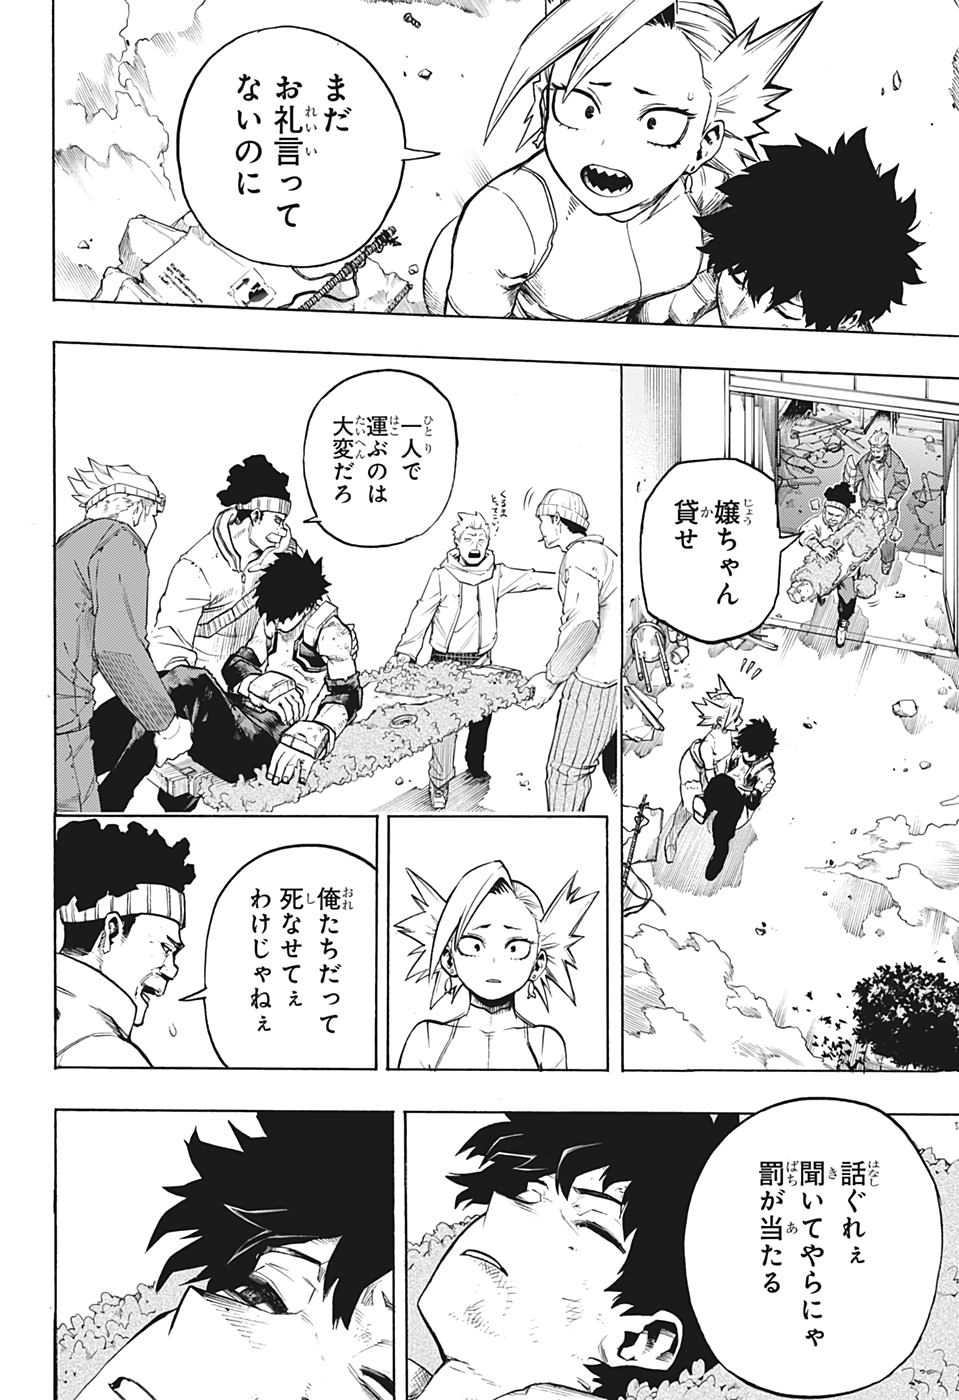 Boku no Hero Academia - Chapter 309 - Page 2